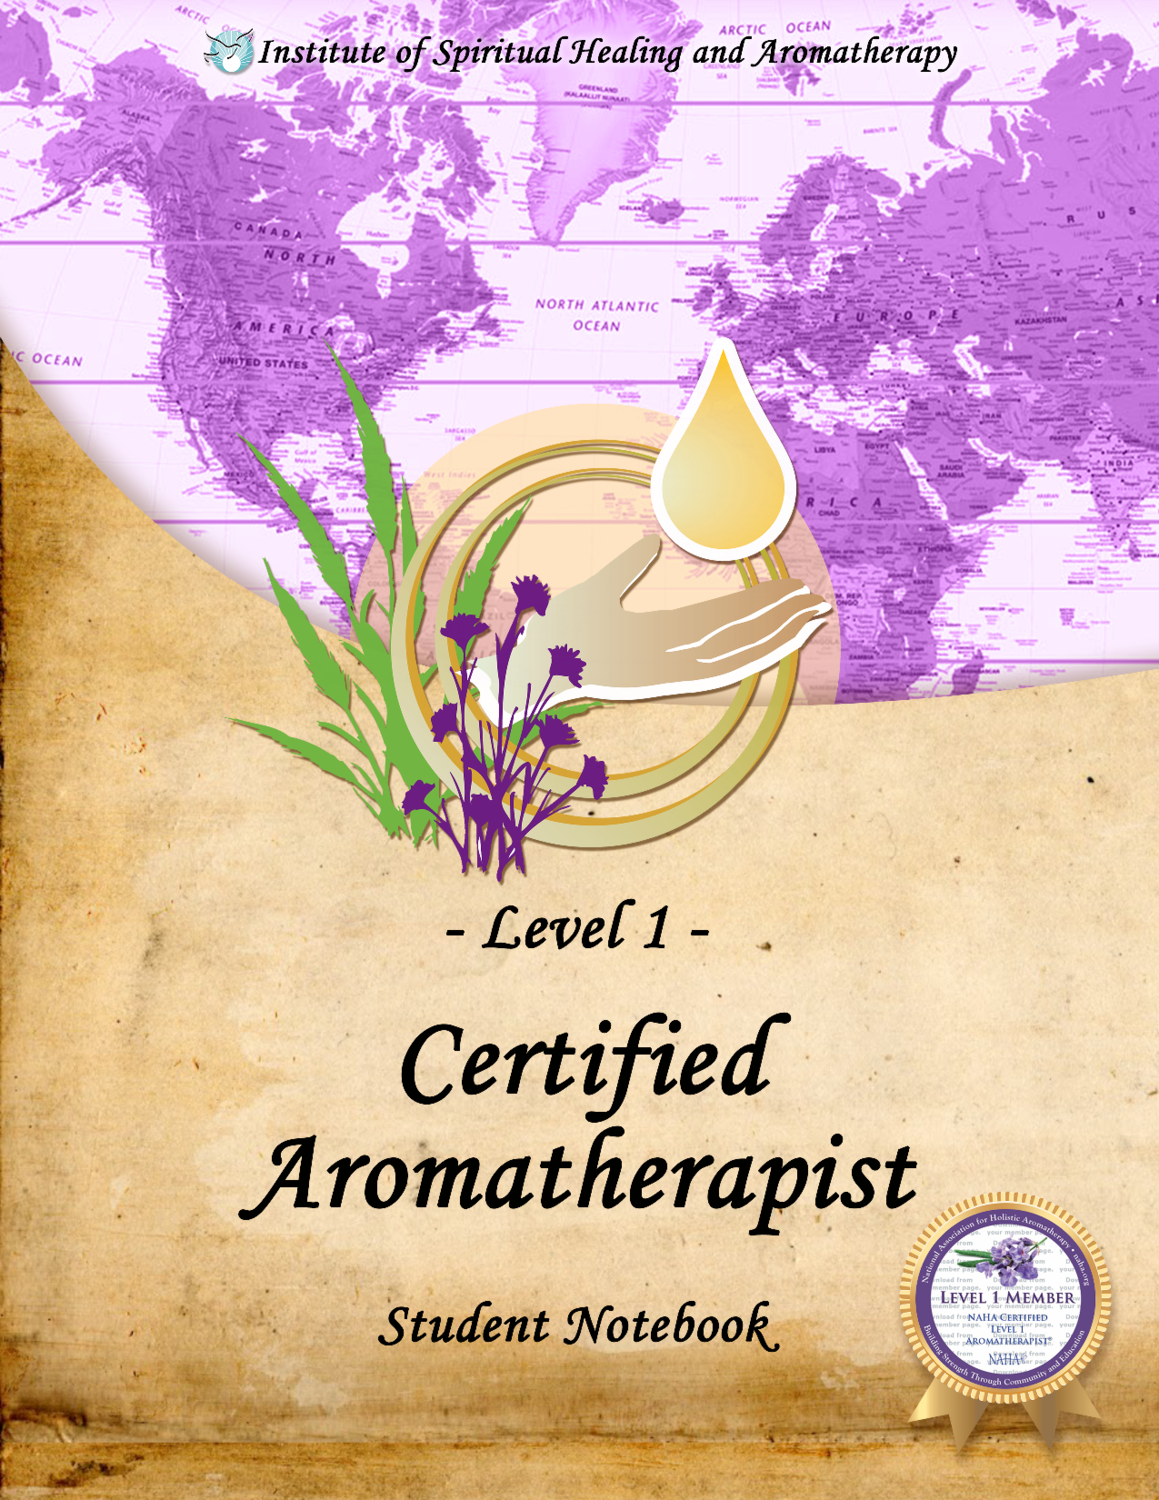 Certified Aromatherapist - Level 1 - Mason, OH - June 22-24, 2018